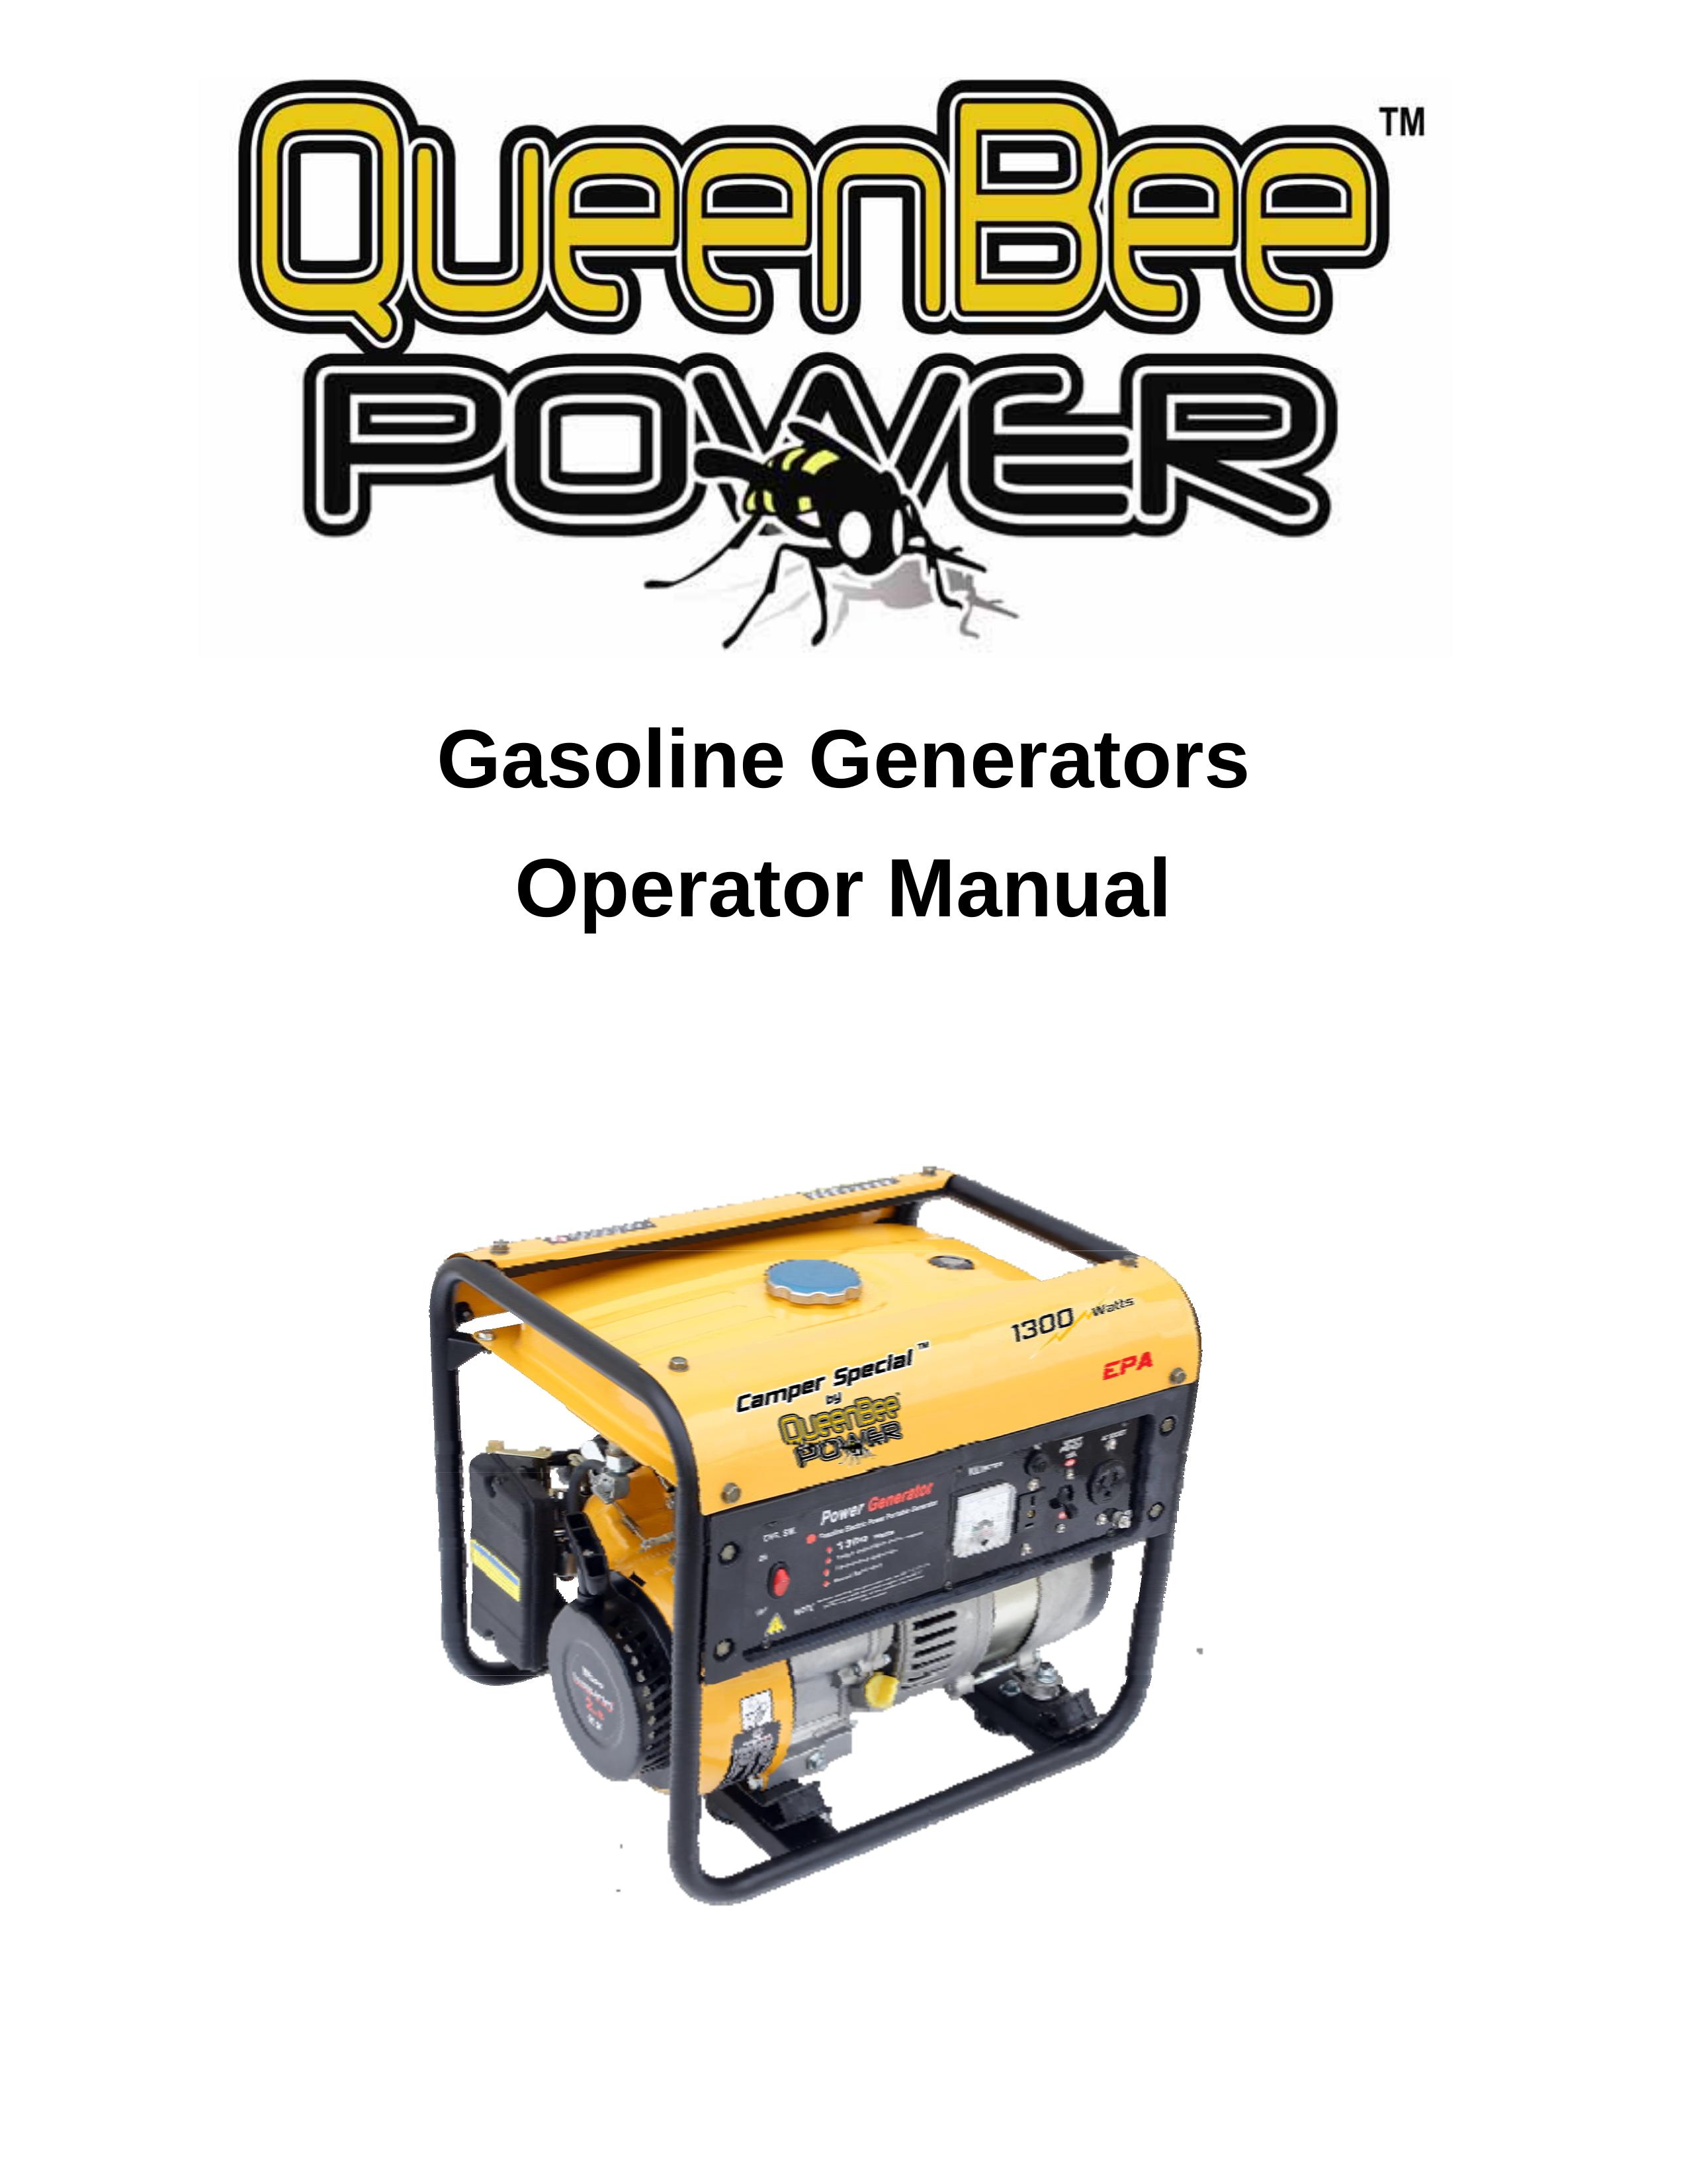 Electrolux QB2800 Portable Generator User Manual